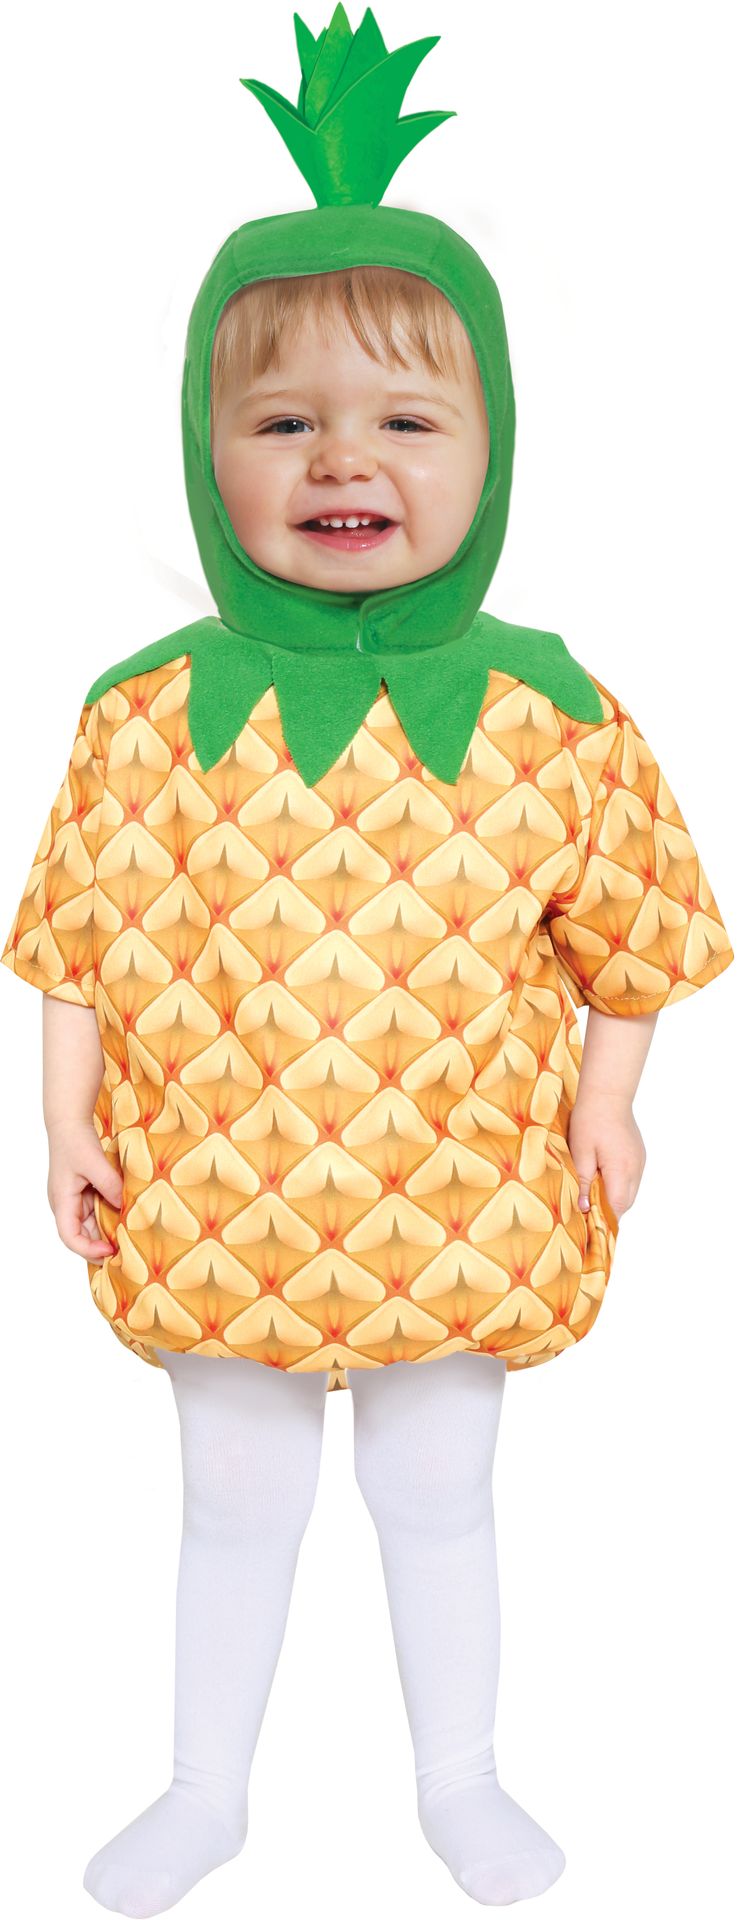 Baby ananas kostuum